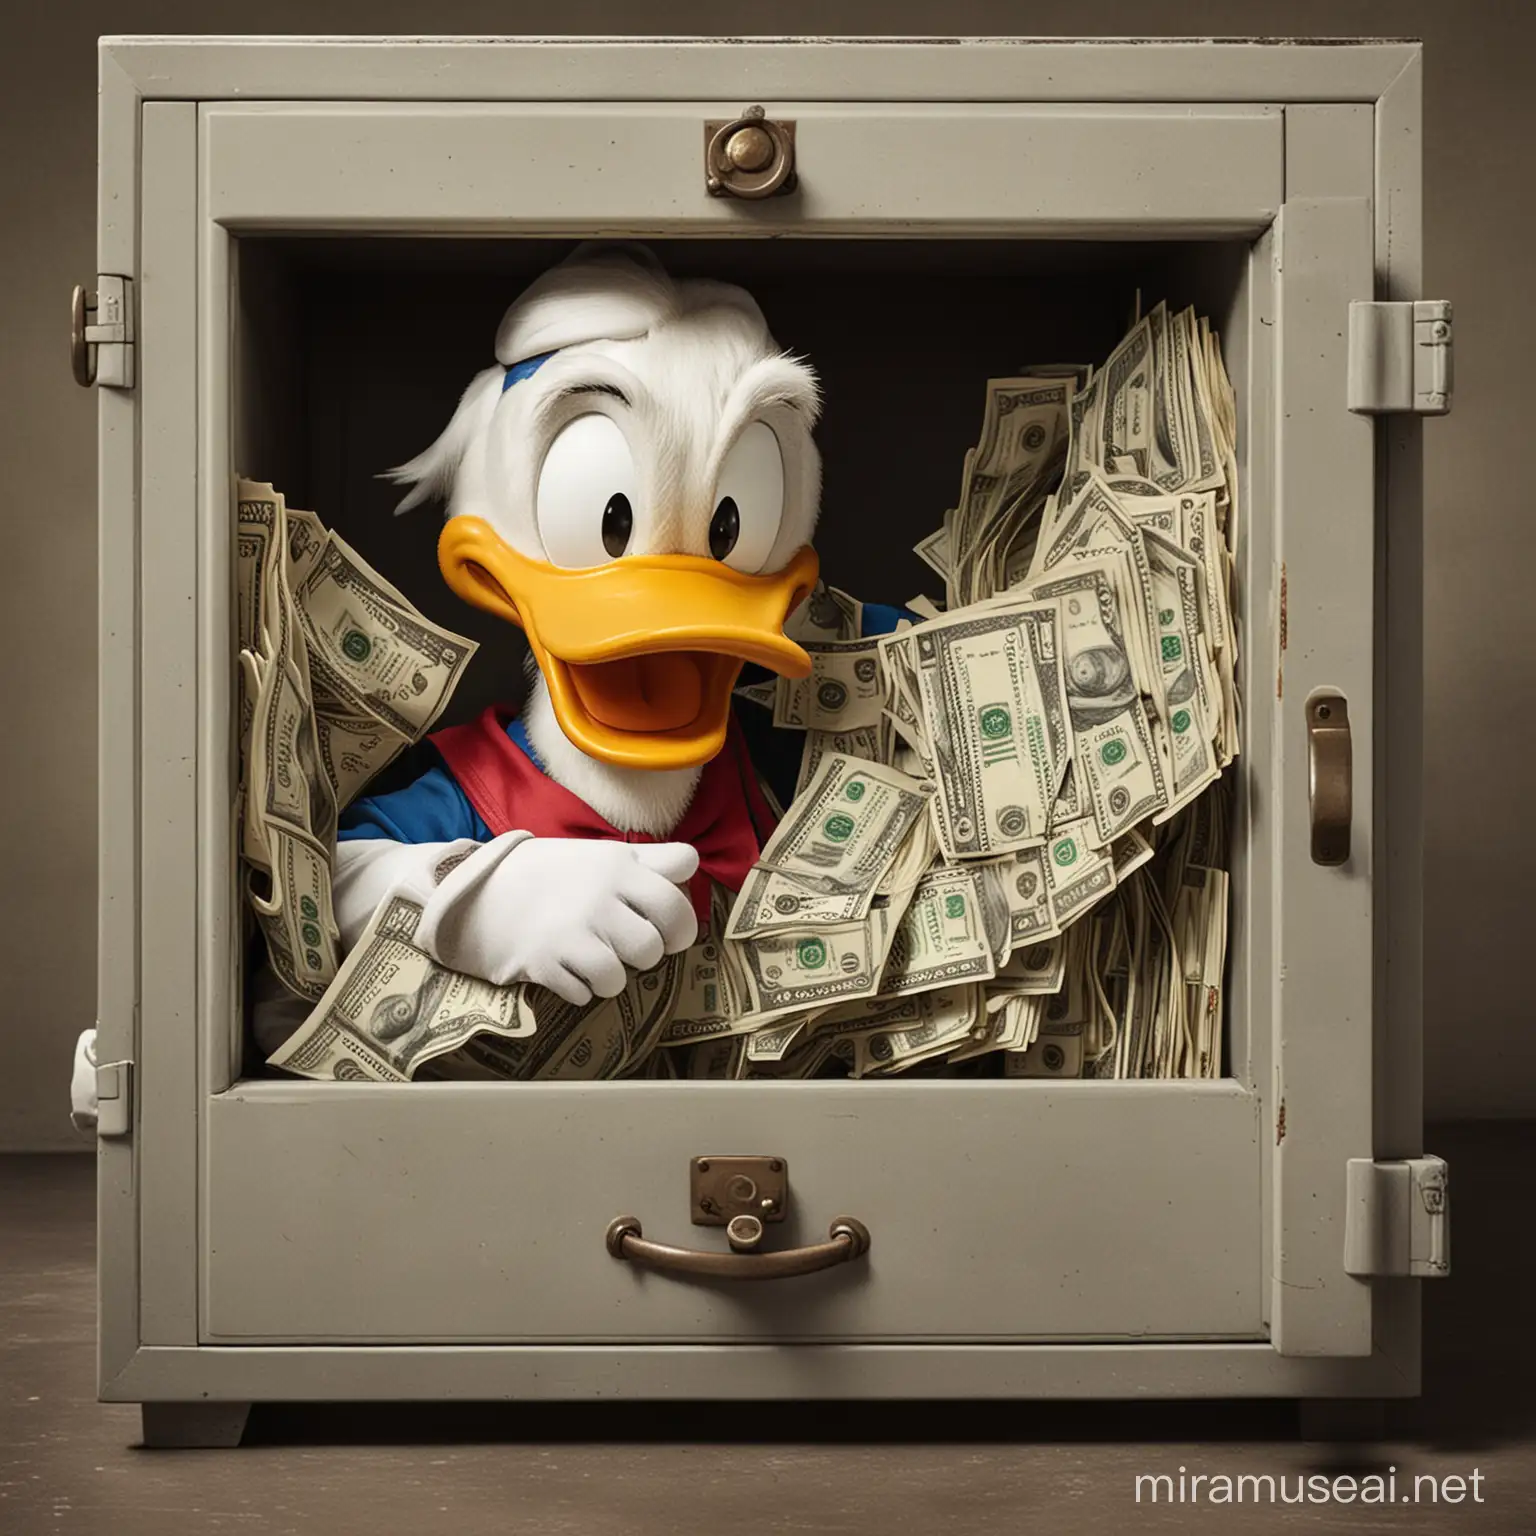 Donald duck, hand Full of money, in bank chest locker